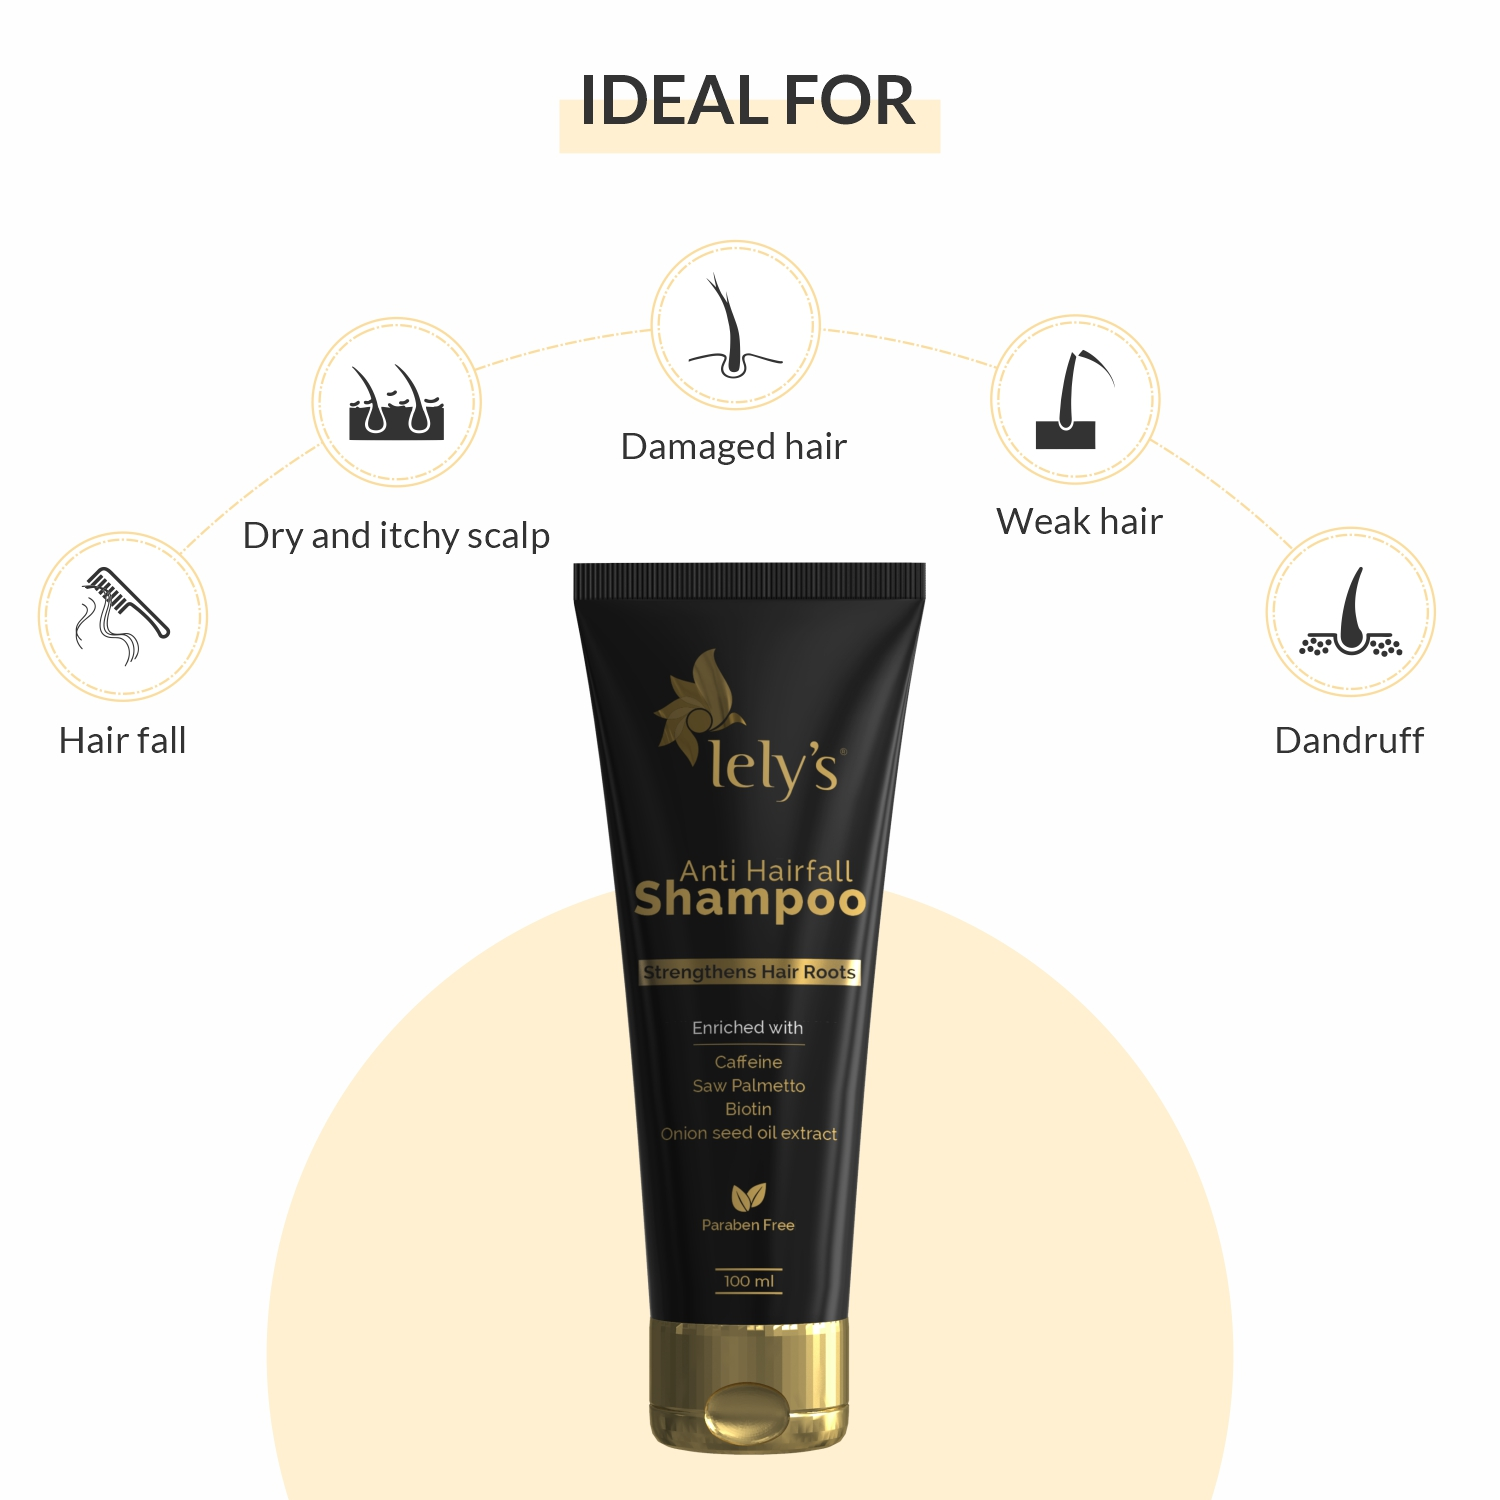 Anti Hairfall Shampoo ideal for